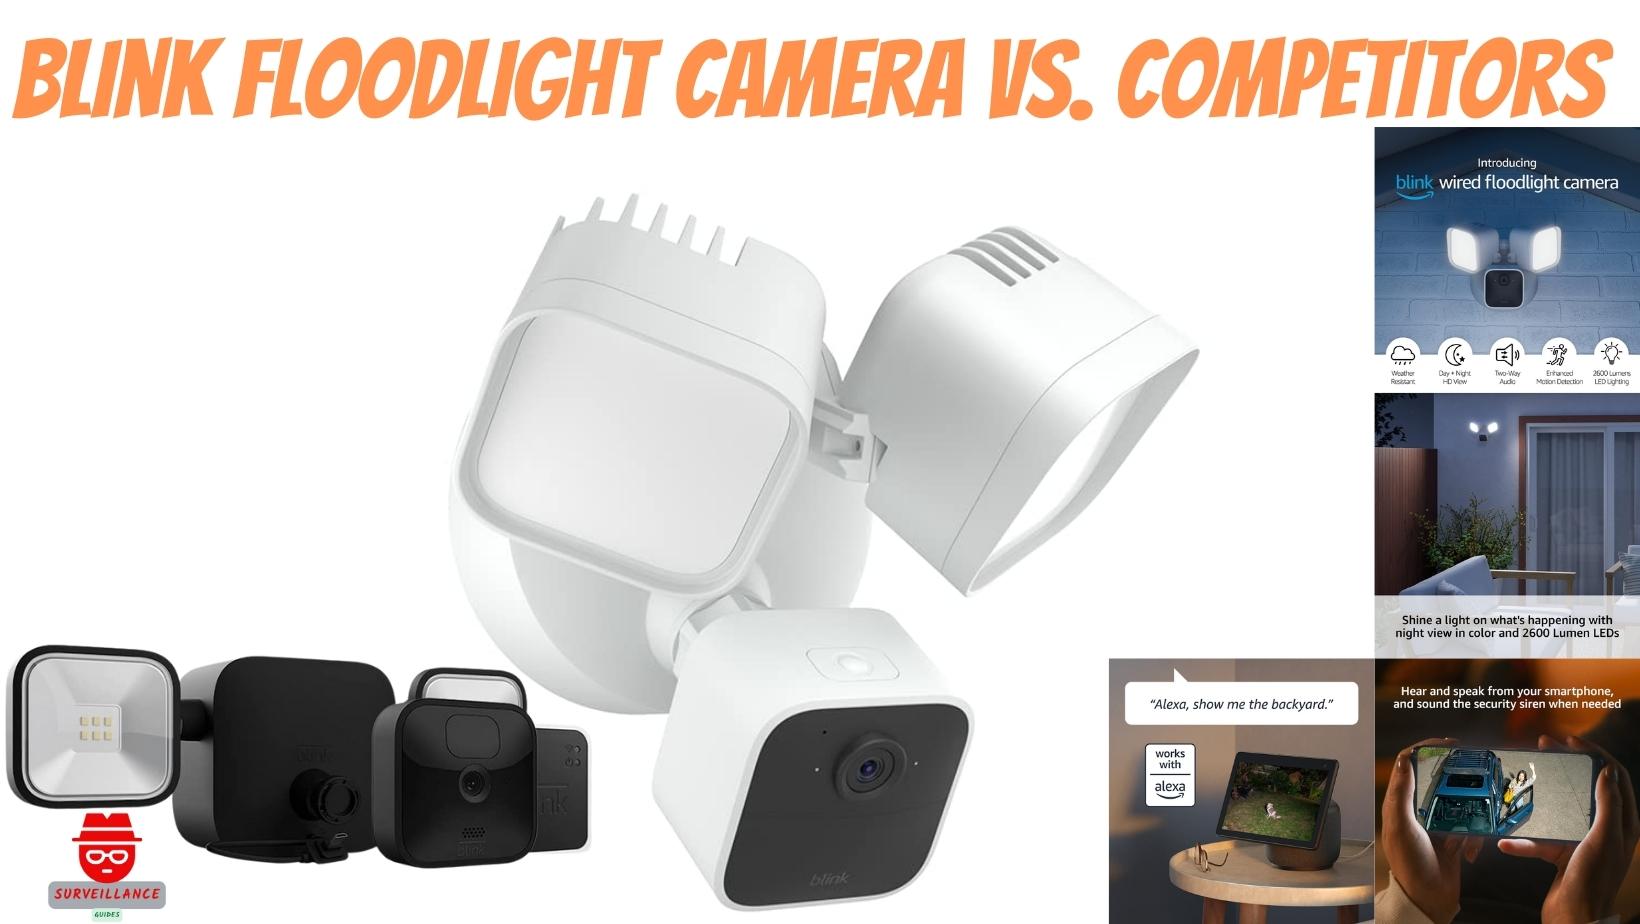 Blink Floodlight Camera vs. Competitors